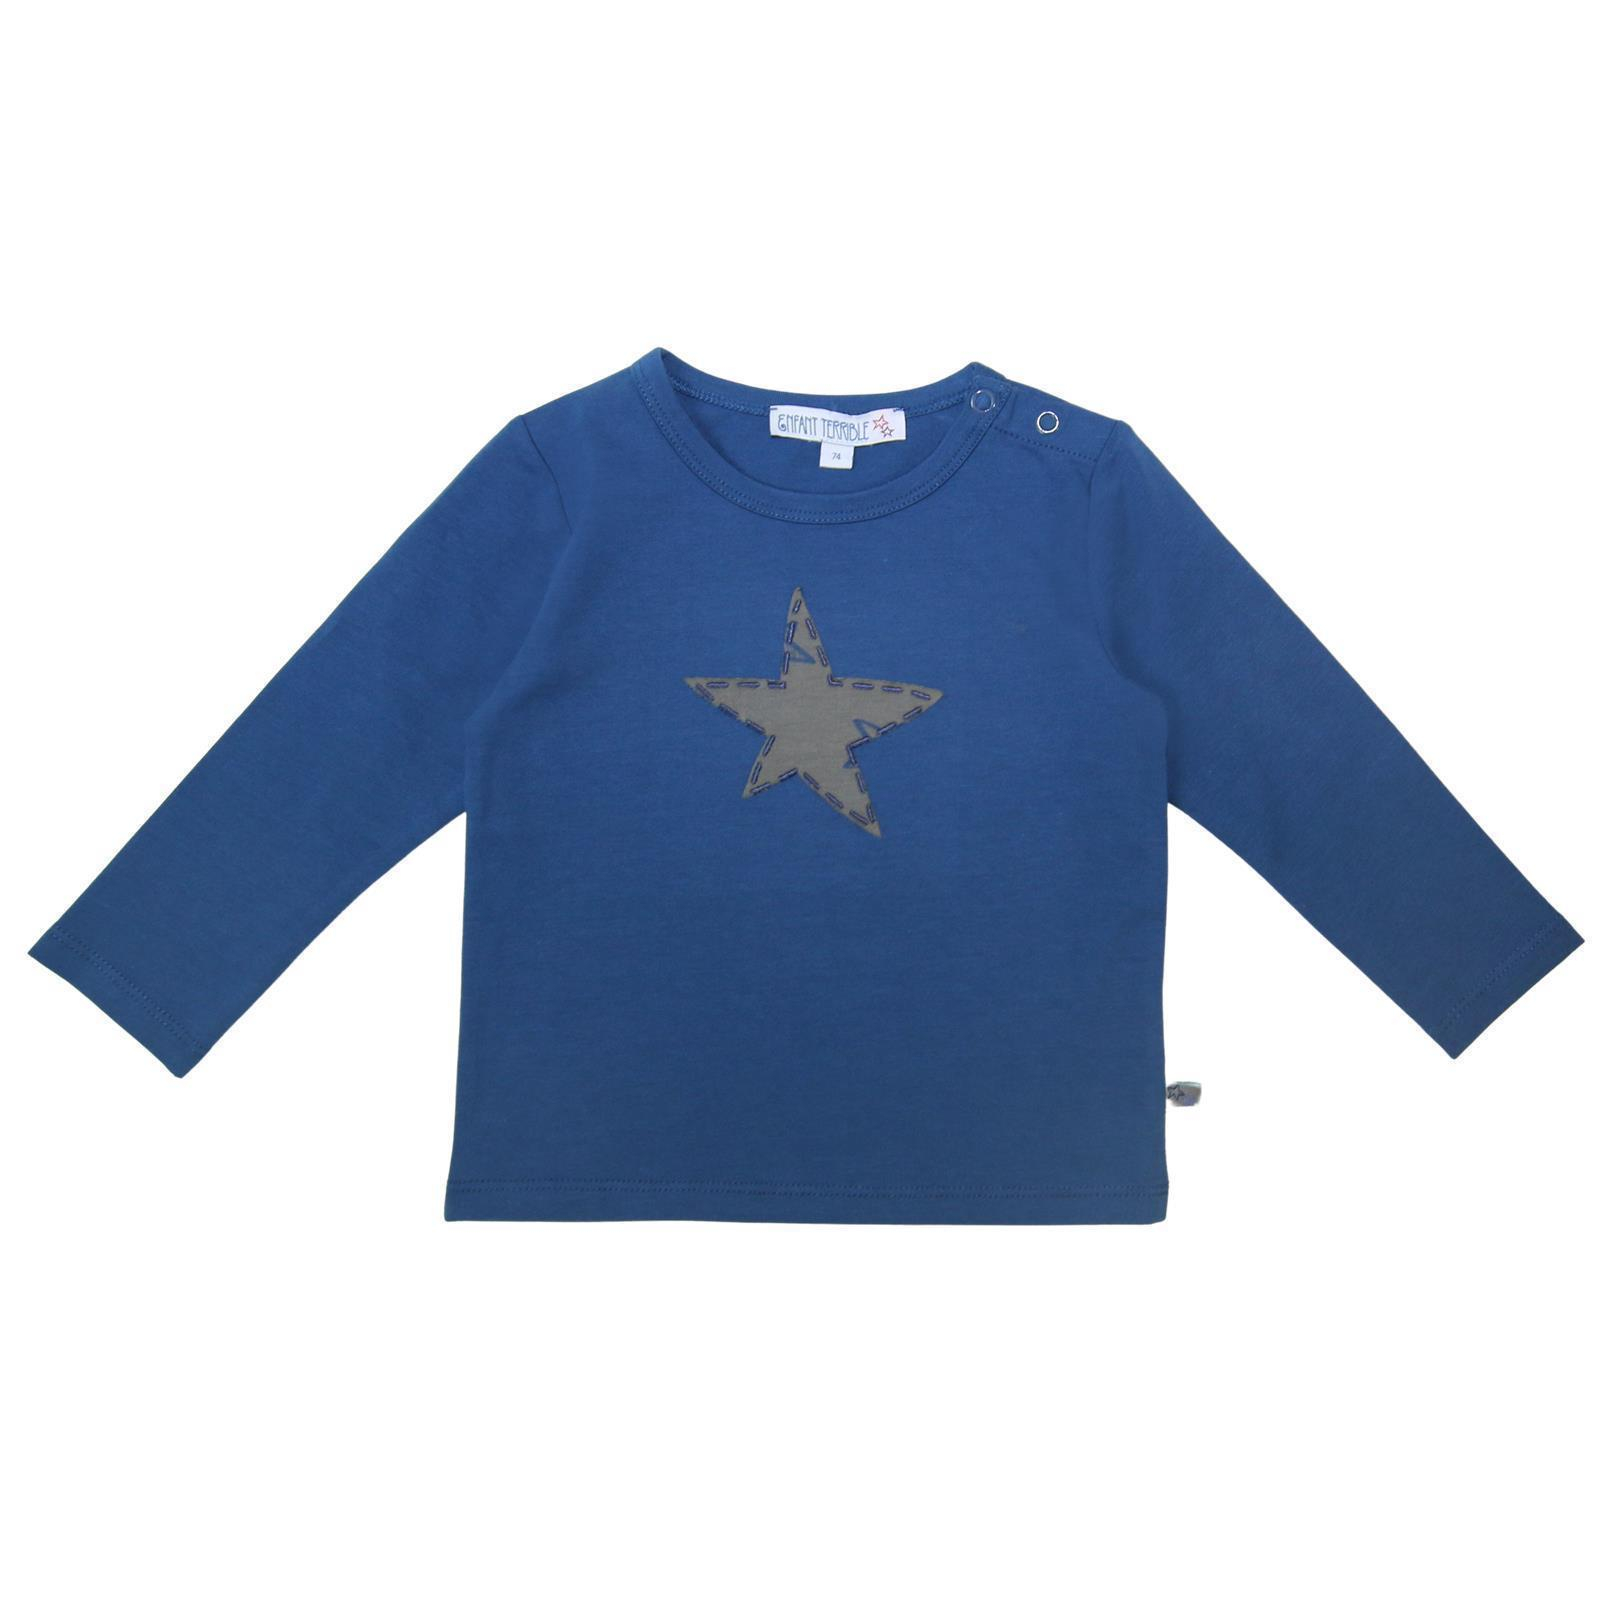 Baby 11.61 T-Shirt, Enfant Applikation, Stern tintenblau, CHF Terrible,